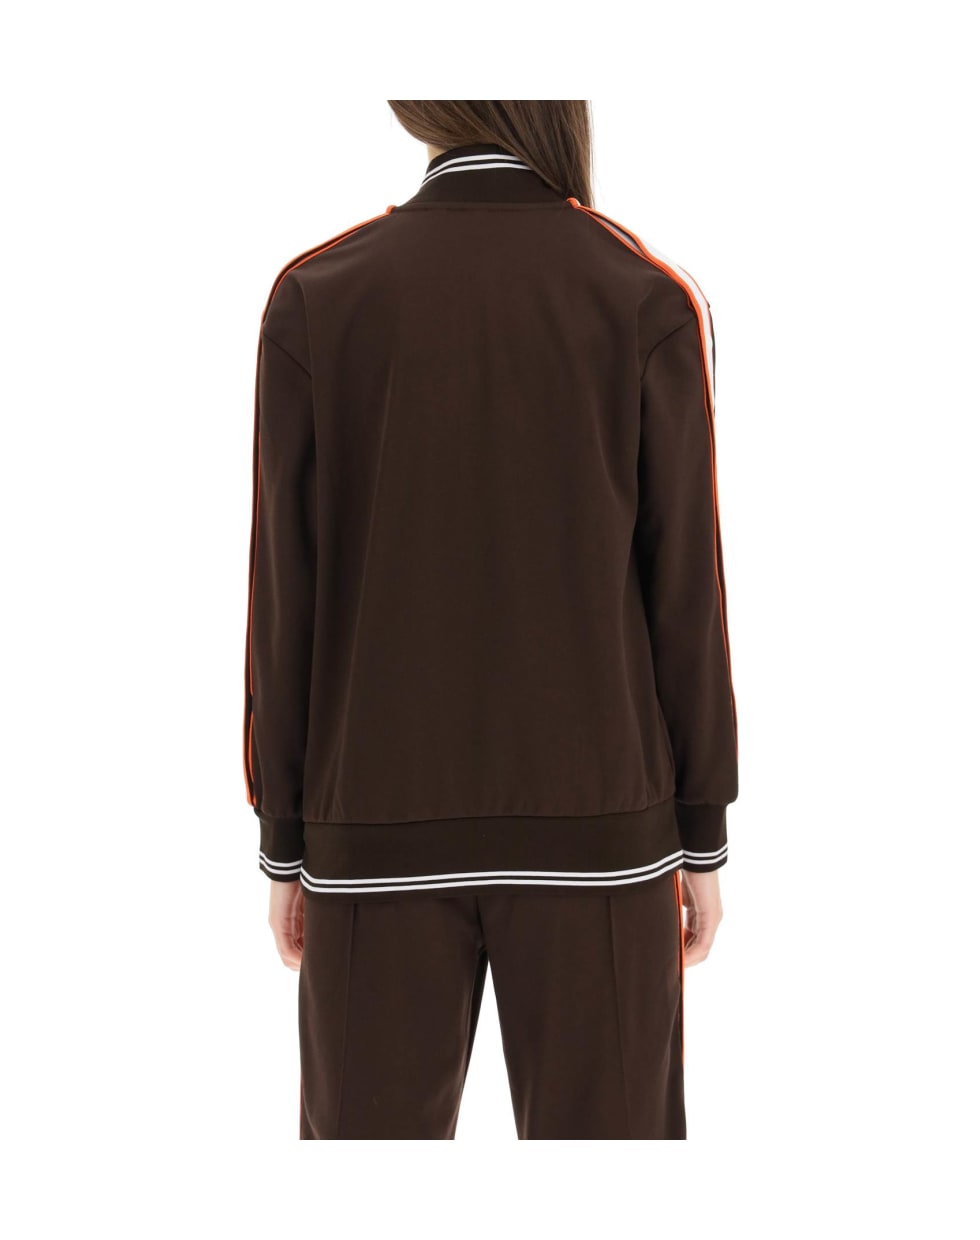 Pinko Friuli Sweatshirt With Buttons On The Sleeves - MARRONE FELCE CHIARO (Brown)